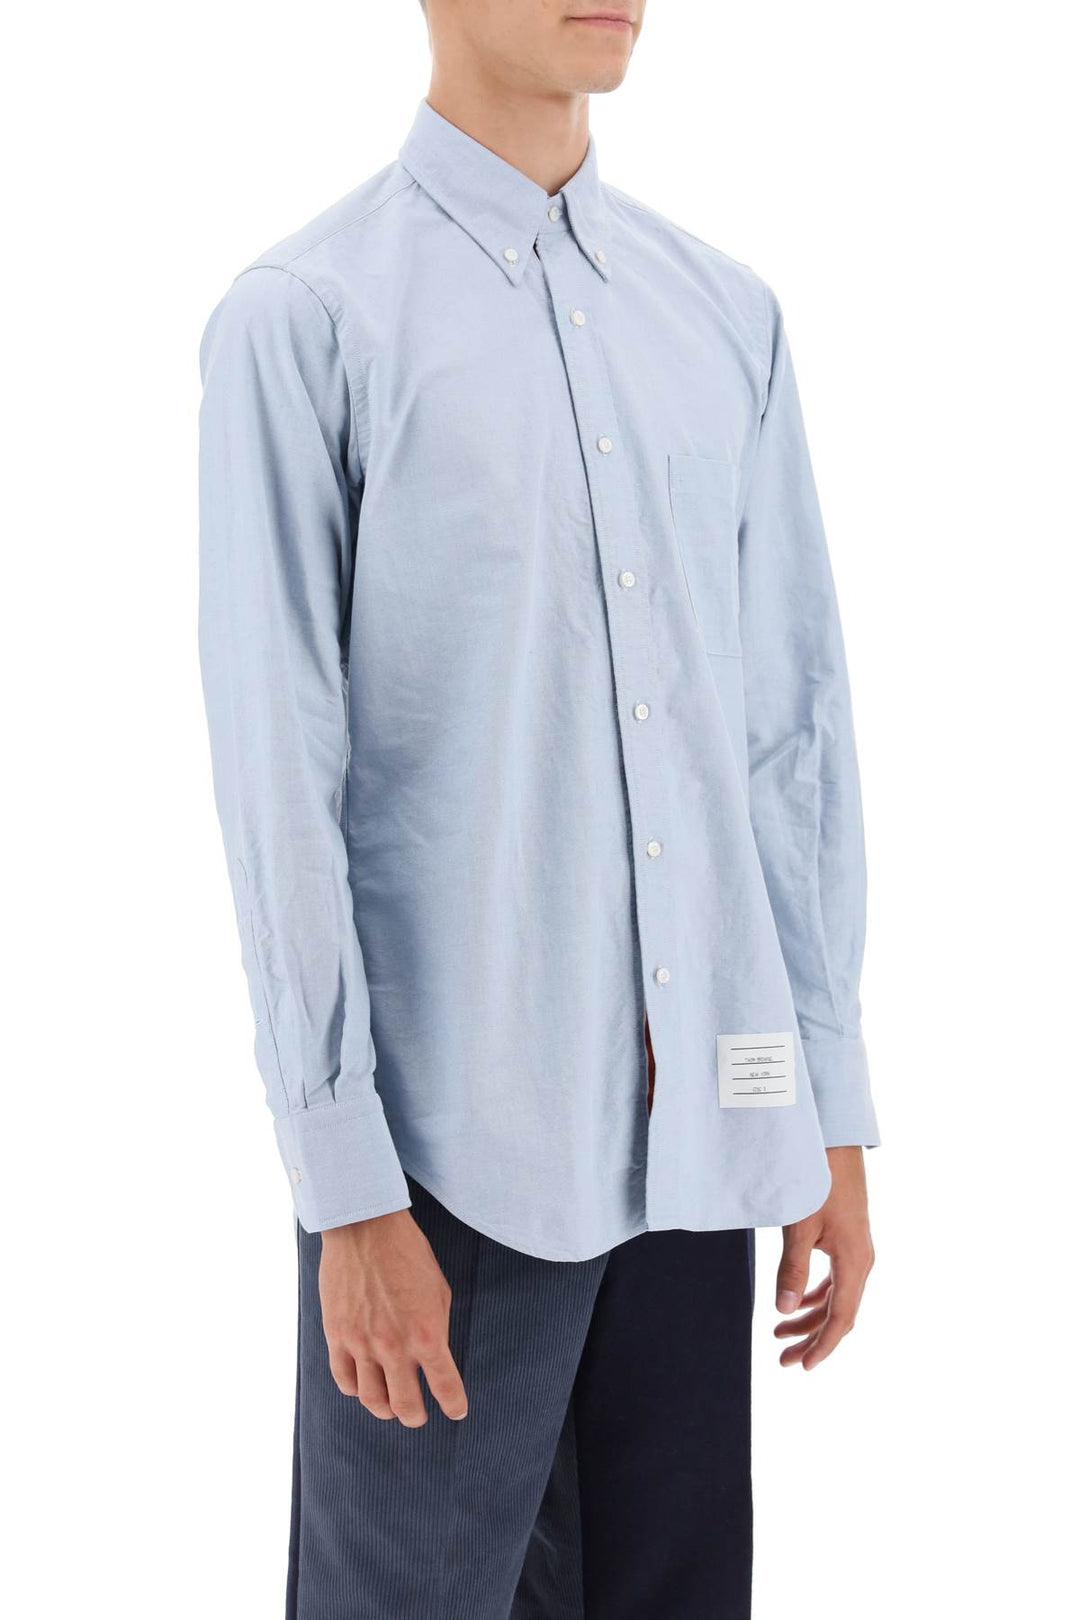 Thom Browne Oxford Cotton Button Down Shirt   Celeste